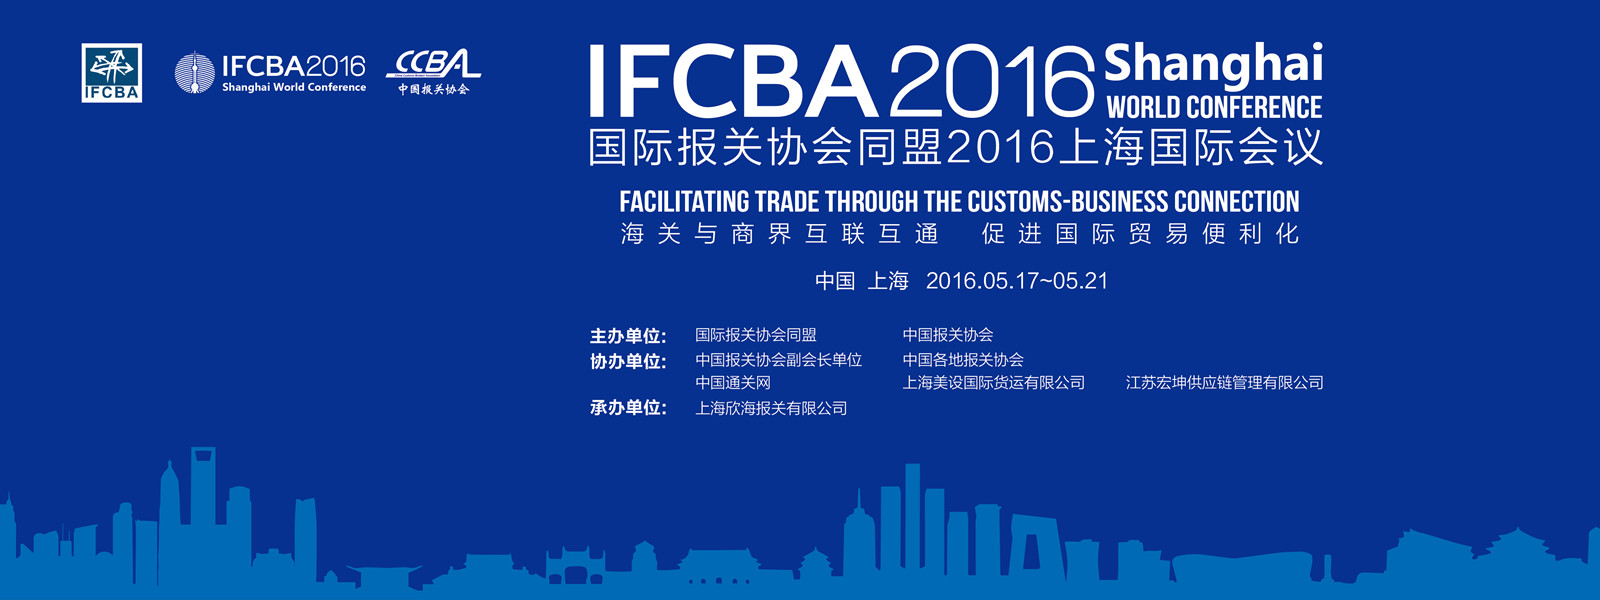 2016IFCBA花絮35—IFCBA2016加拿大报关协会副会长、IFCBA常务理事发言